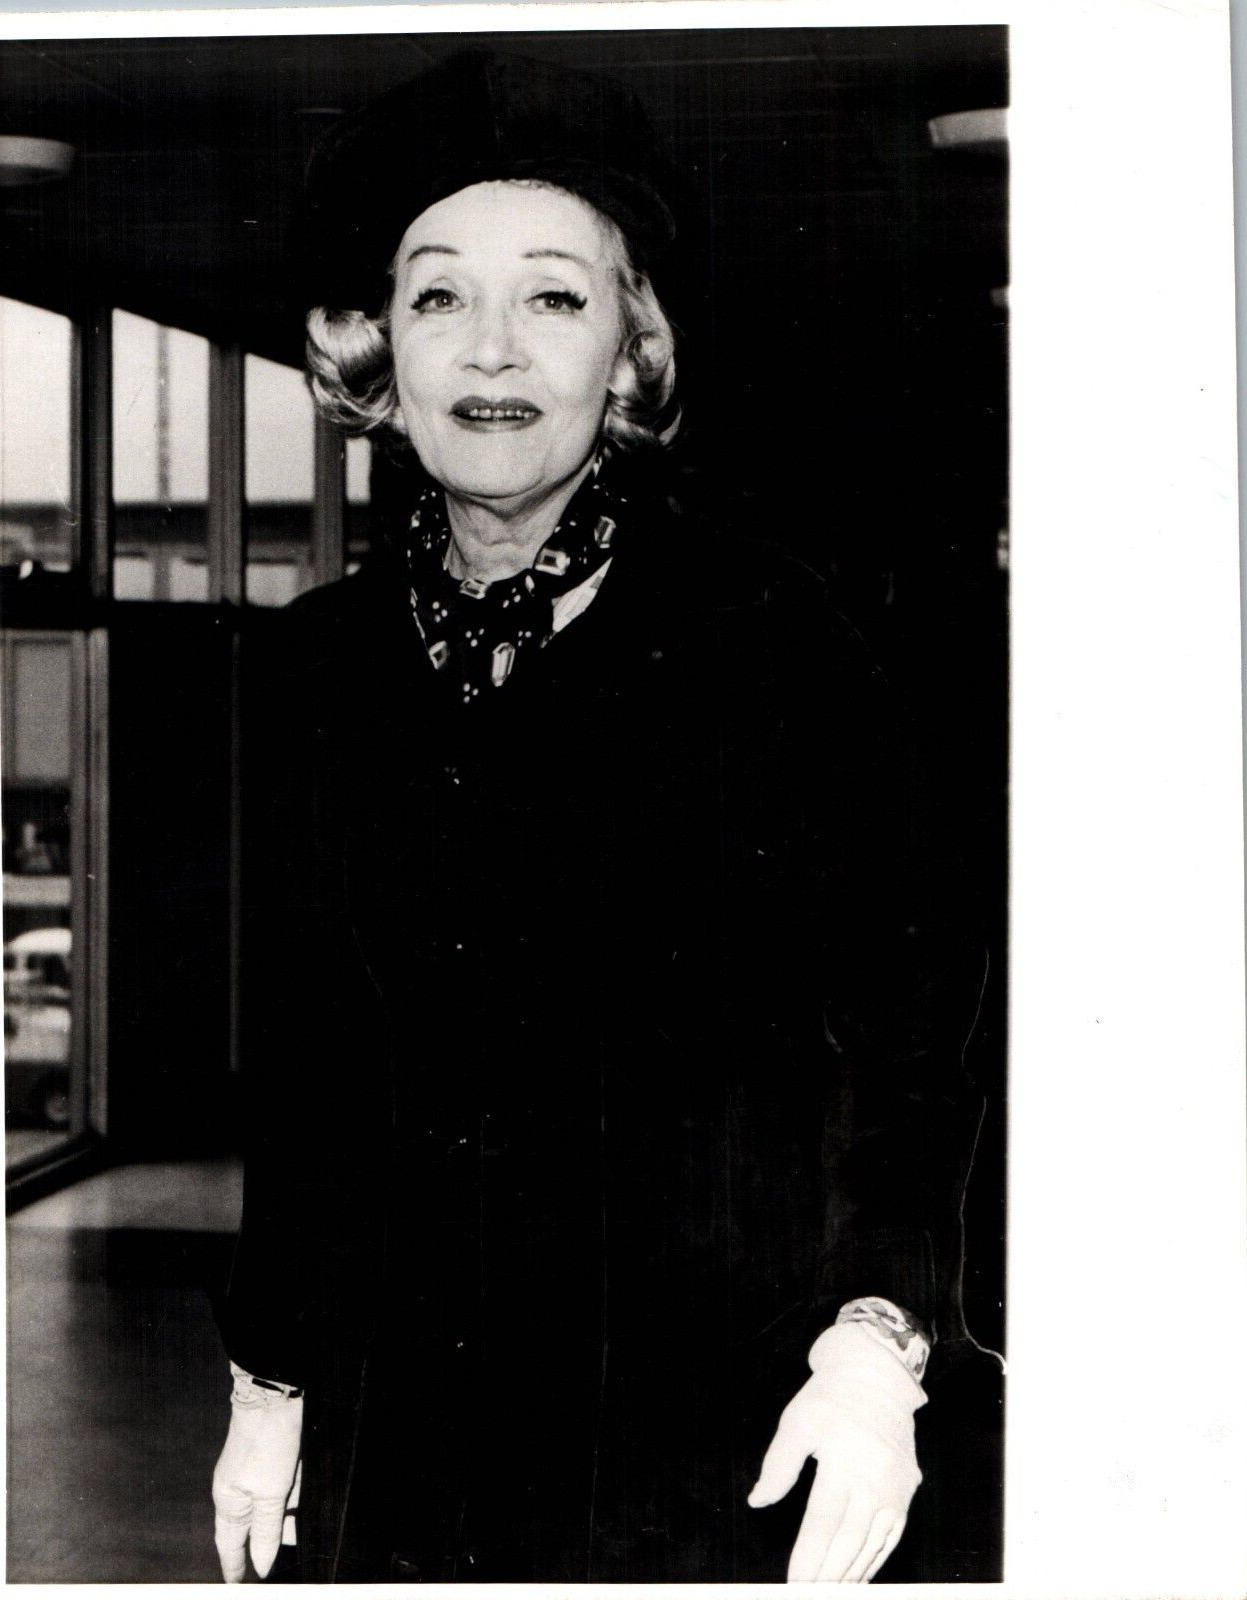 HOLLYWOOD BEAUTY MARLENE DIETRICH STYLISH POSE STUNNING PORTRAIT 1972 Photo C35